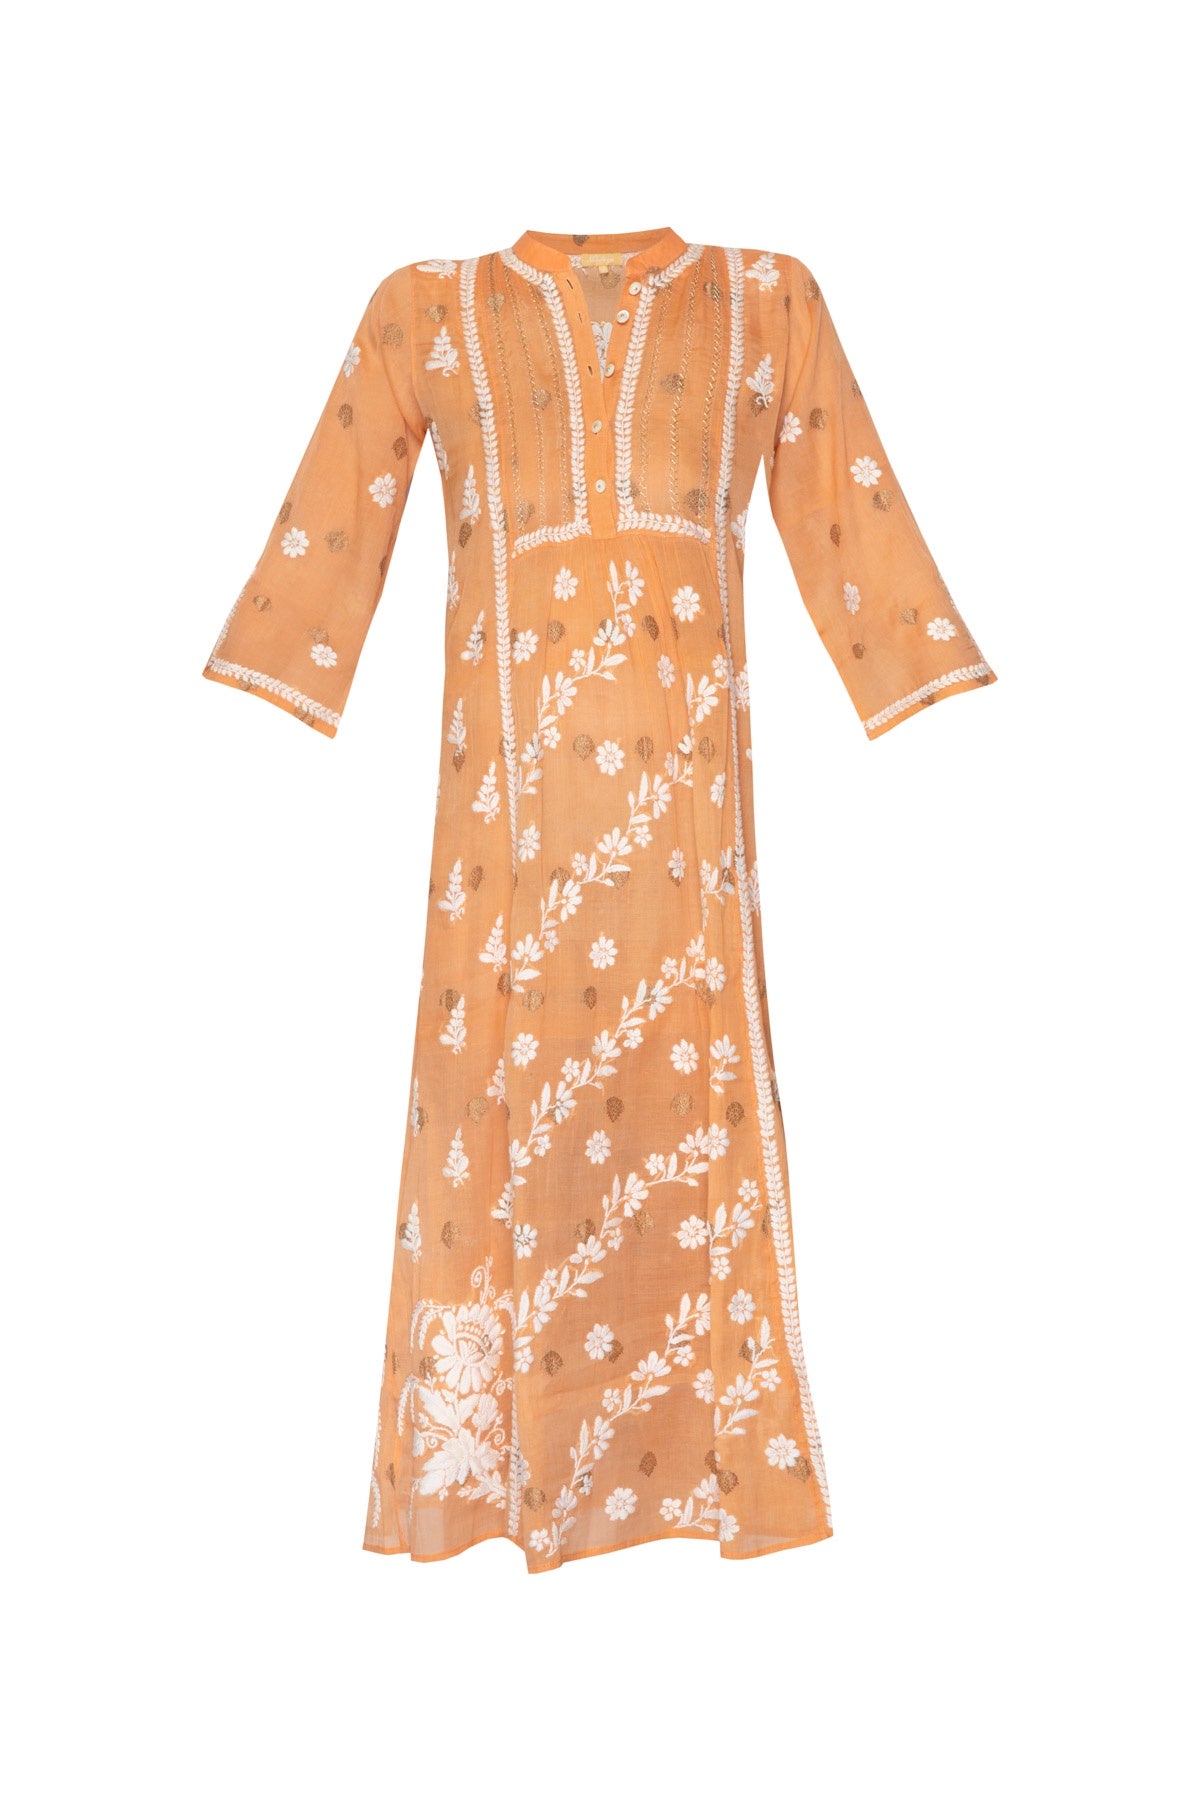 Piazza Gold Weave Dress - Melba Orange